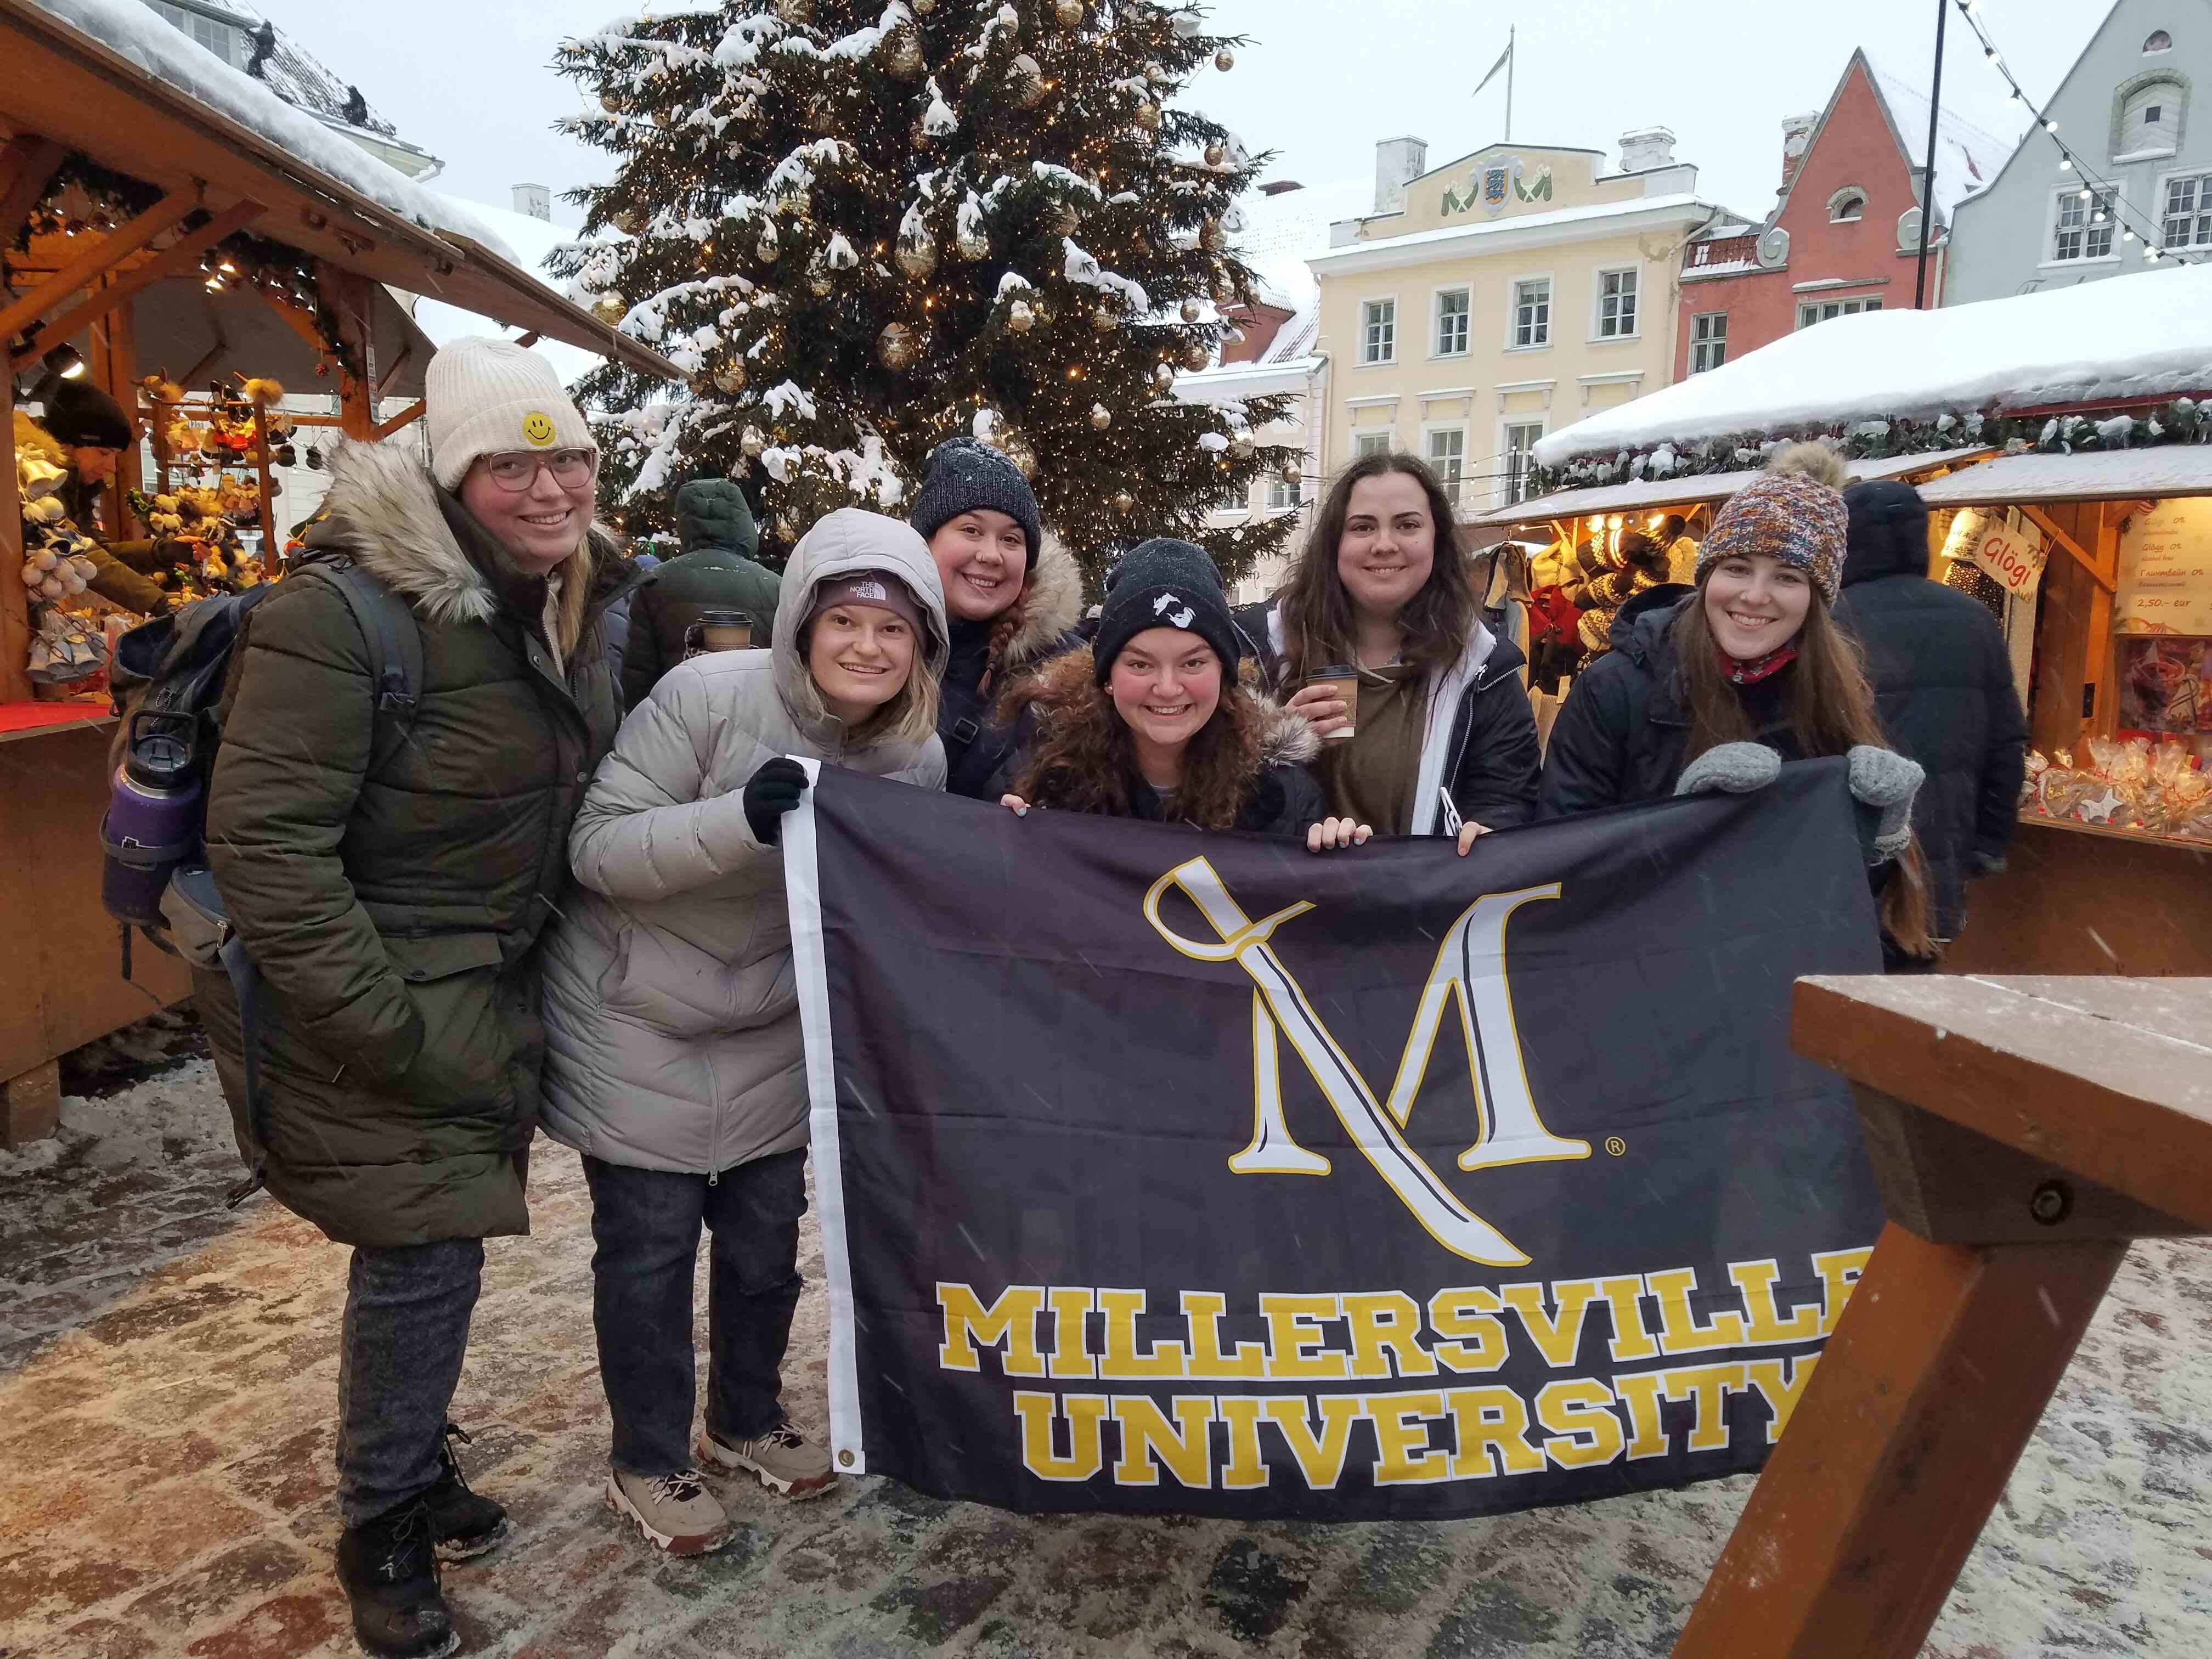 Students studying abroad in Sweden visit Tallinn, Estonia.